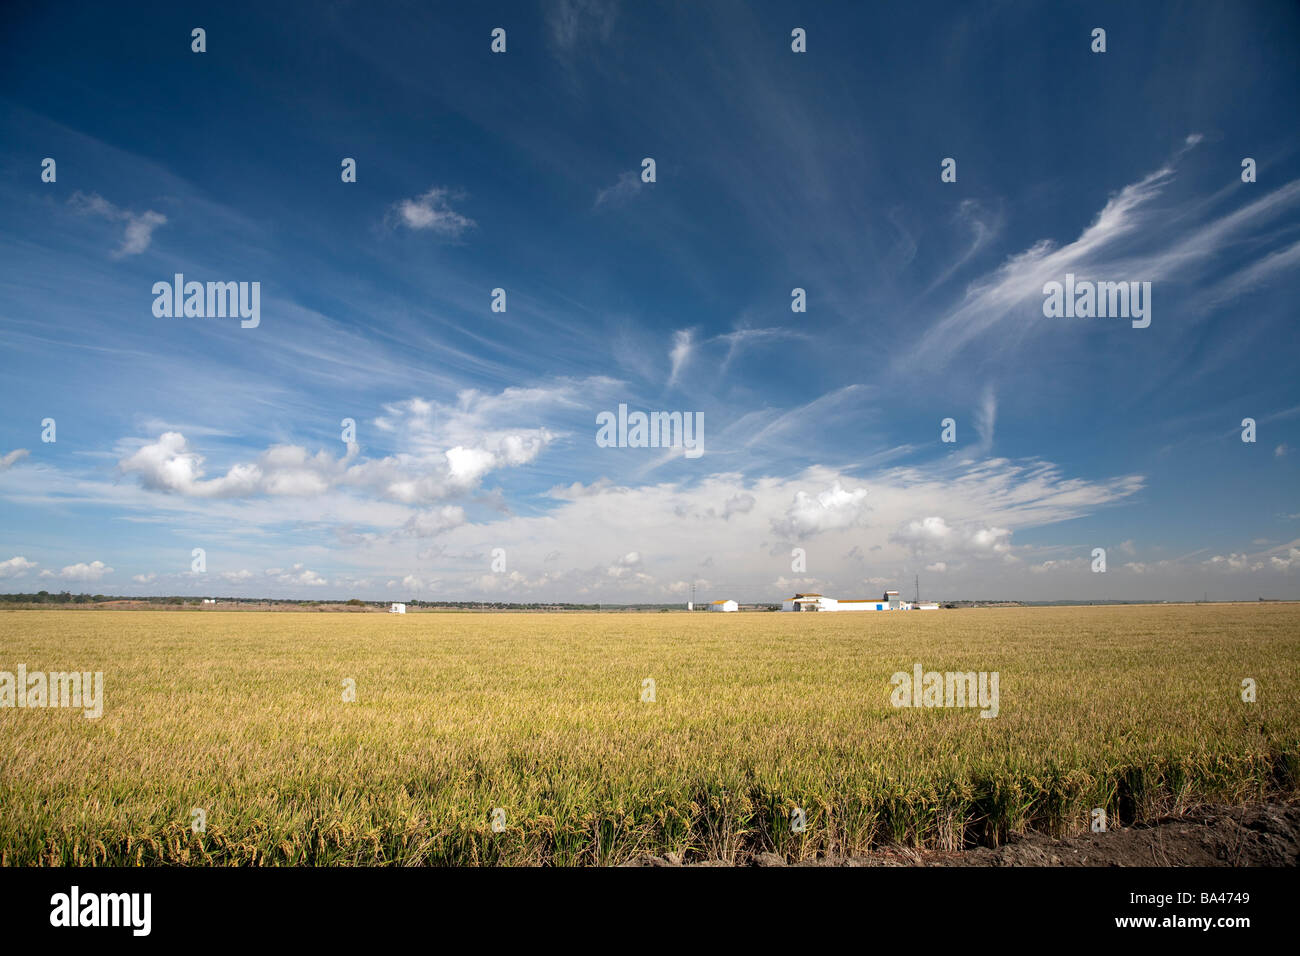 Mature rice fields in the Doñana marshland area, Isla Mayor, Spain Stock Photo